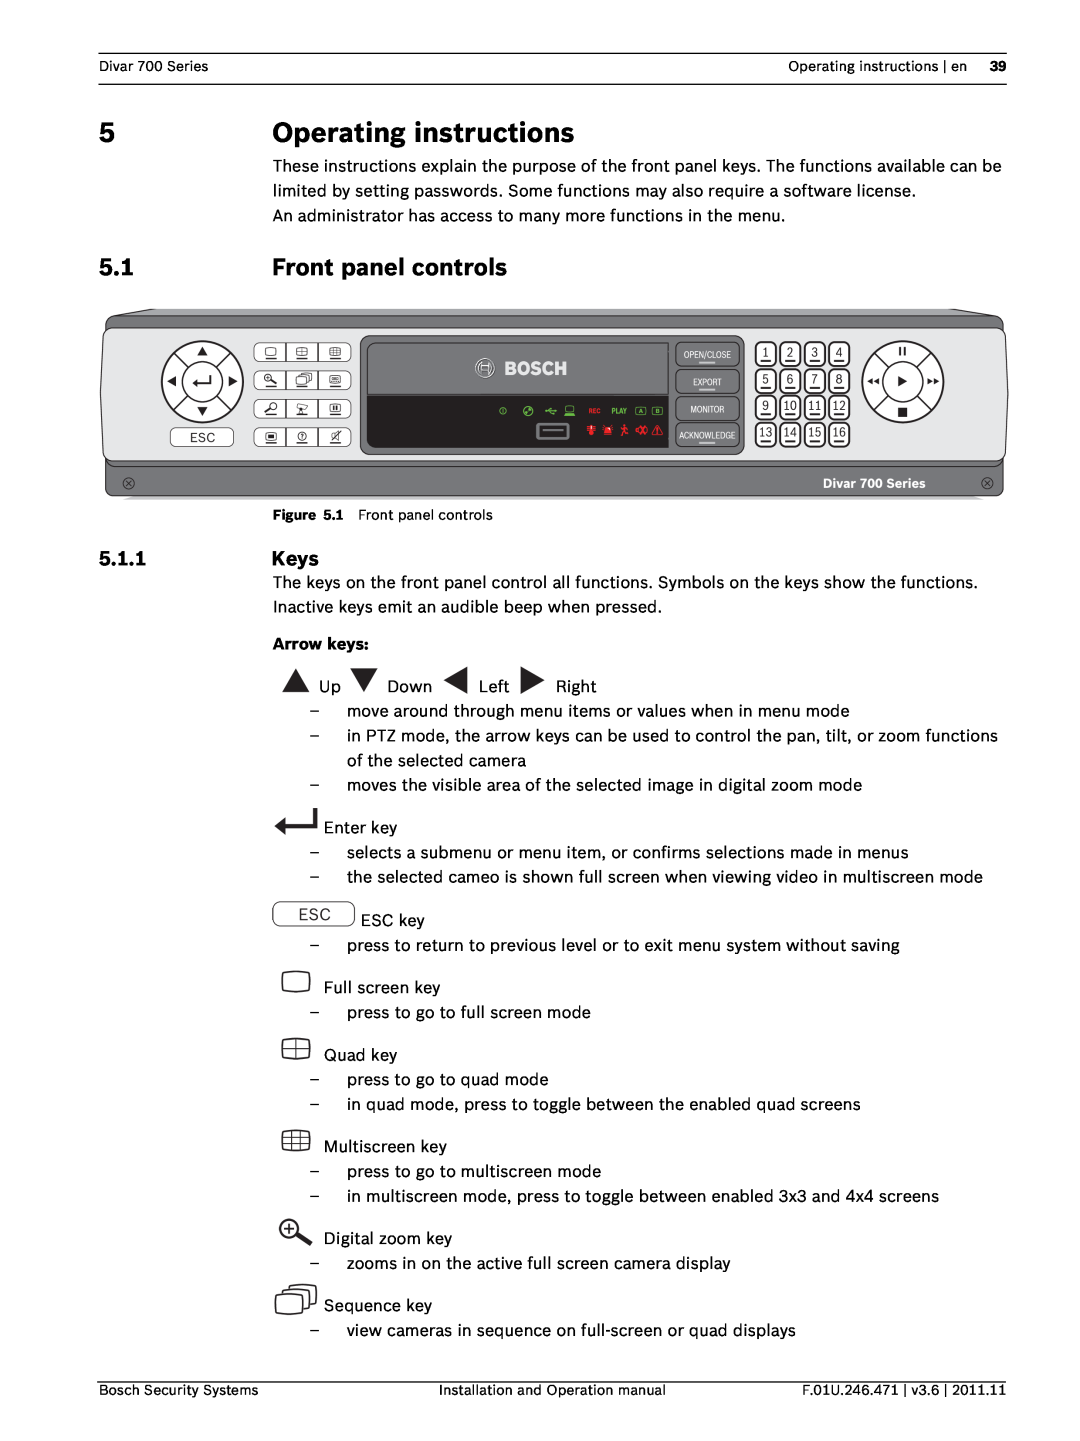 Bosch Appliances 700 operation manual Operating instructions, Front panel controls, 5.1.1Keys, Arrow keys 